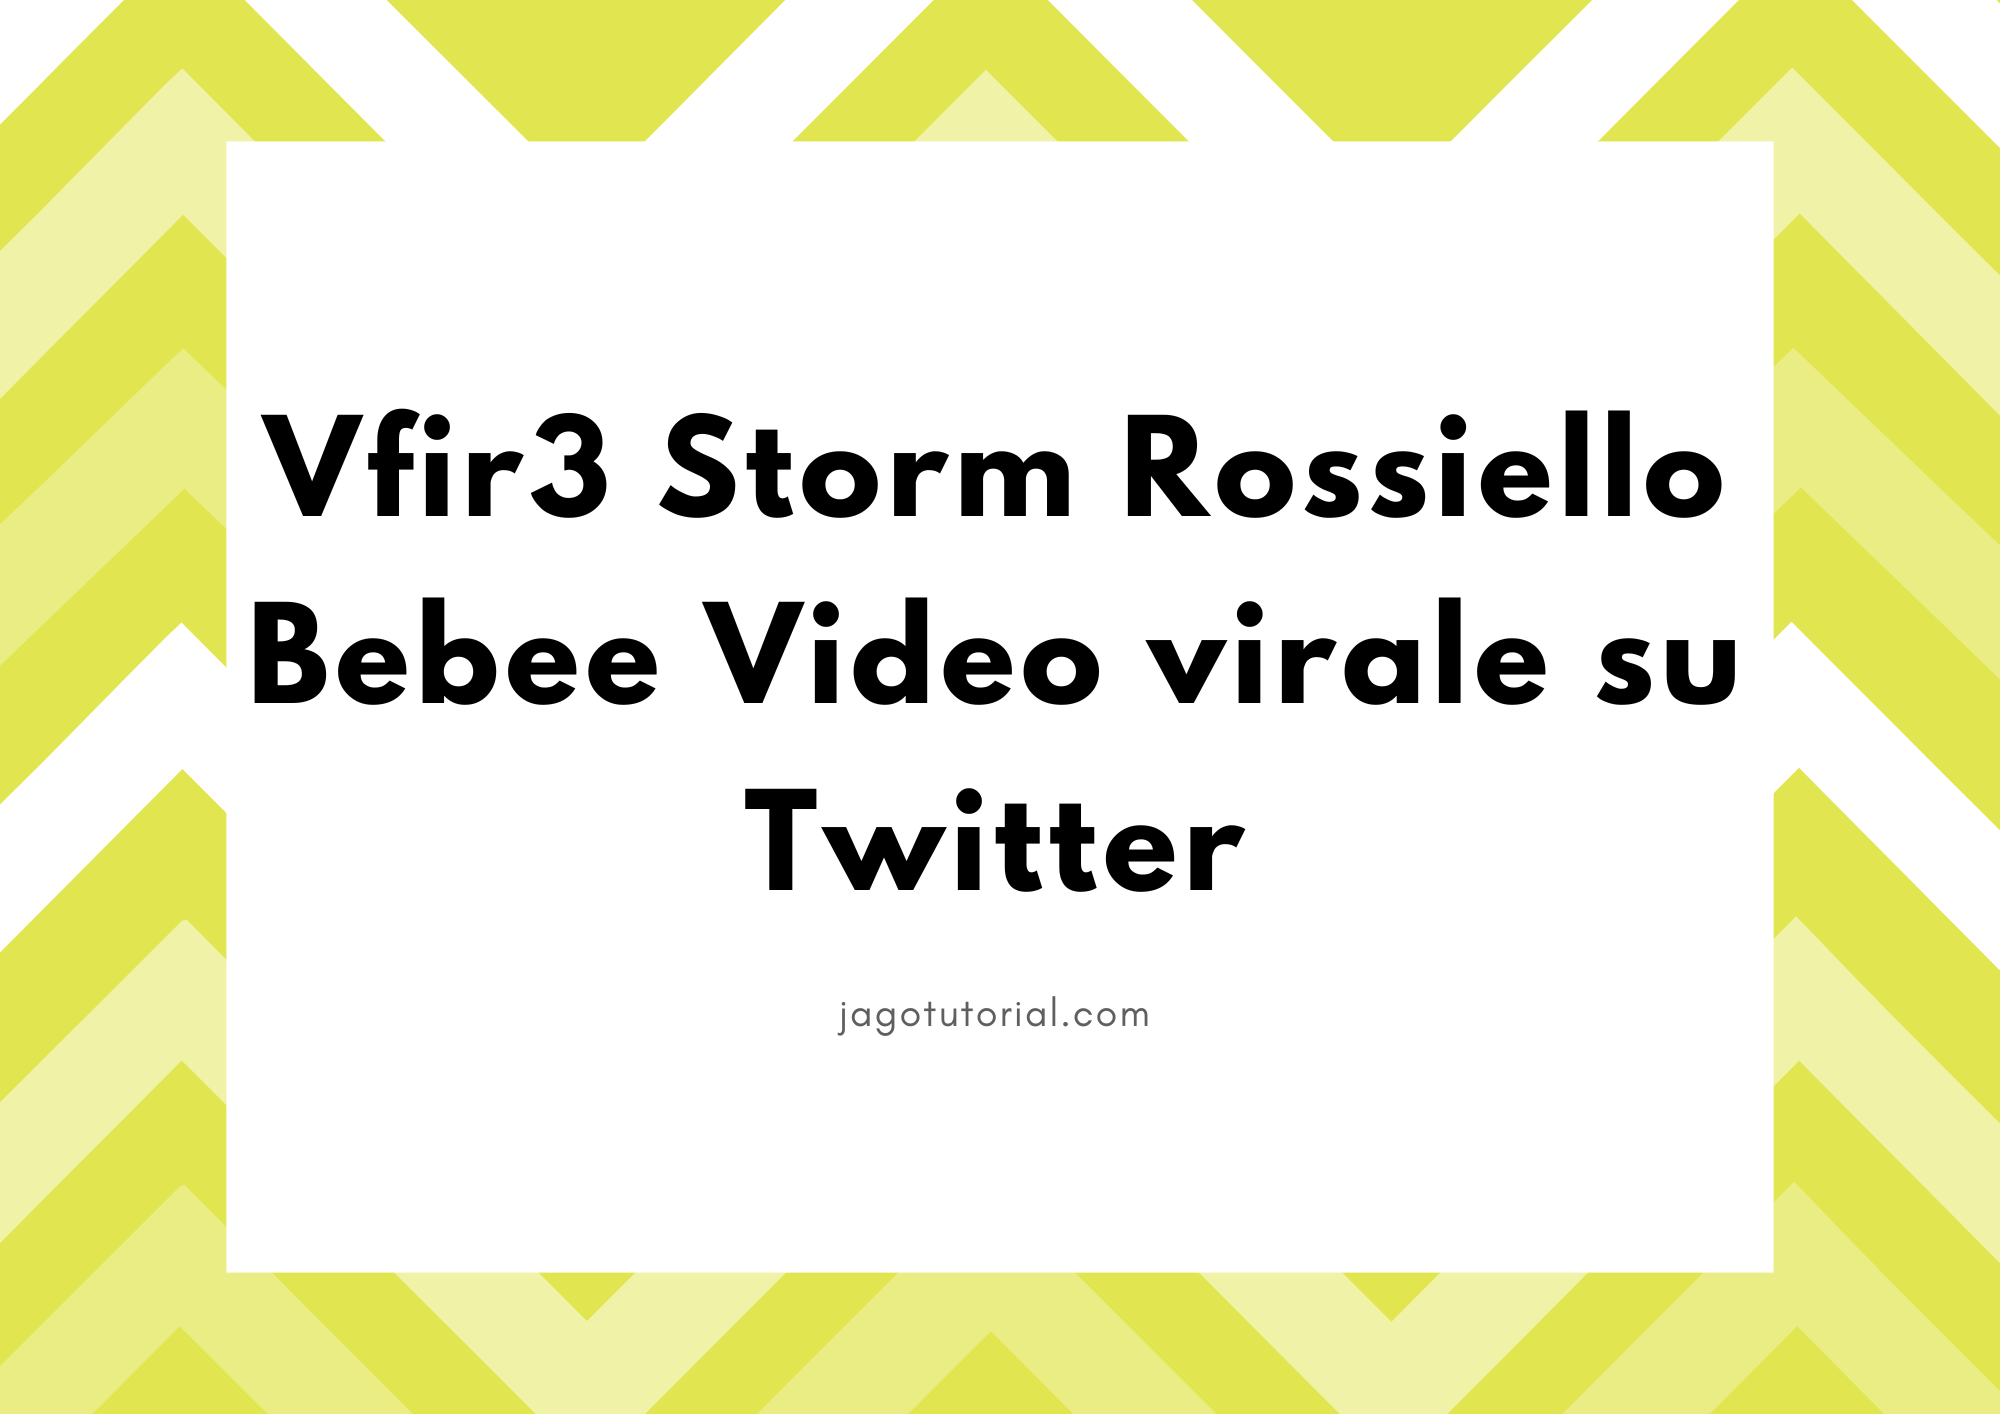 Vfir3 Storm Rossiello Bebee Video virale su Twitter